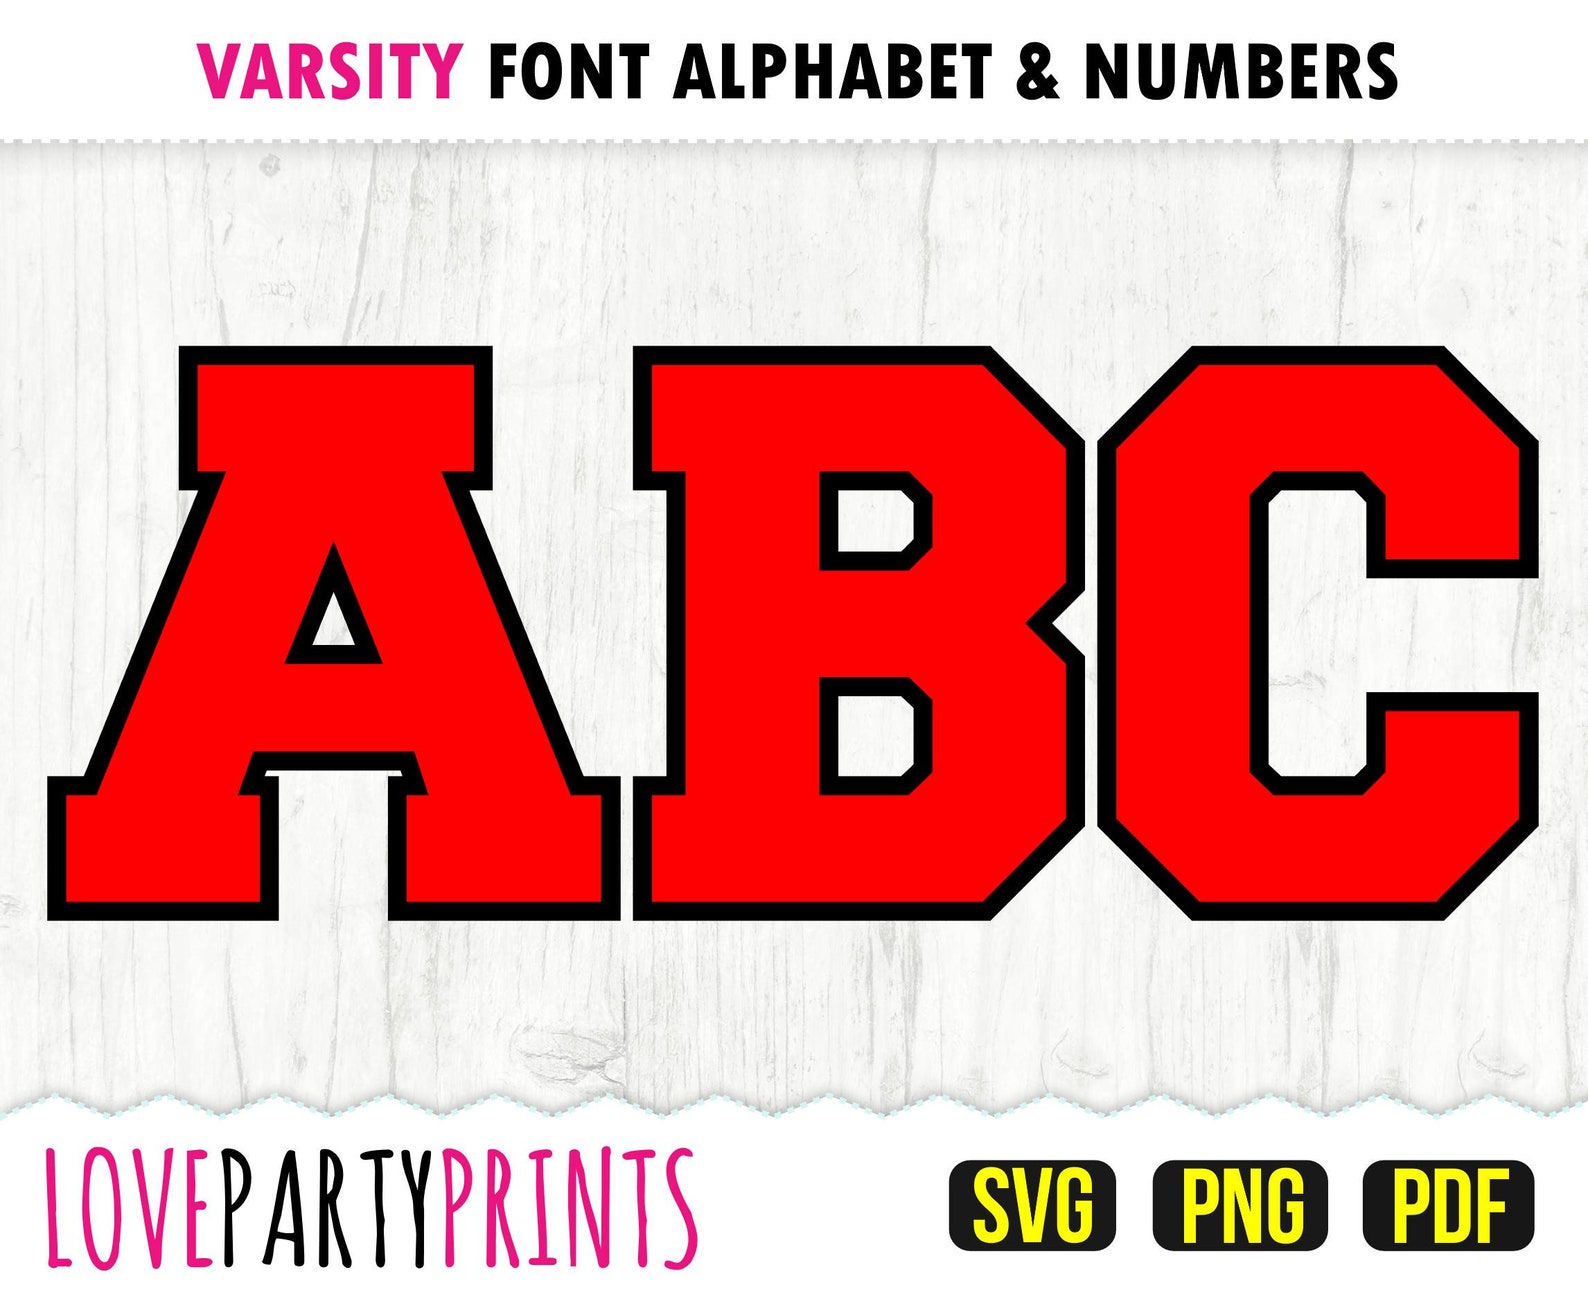 Varsity Layered Font SVG Png and Pdf Files College Font Svg - Etsy